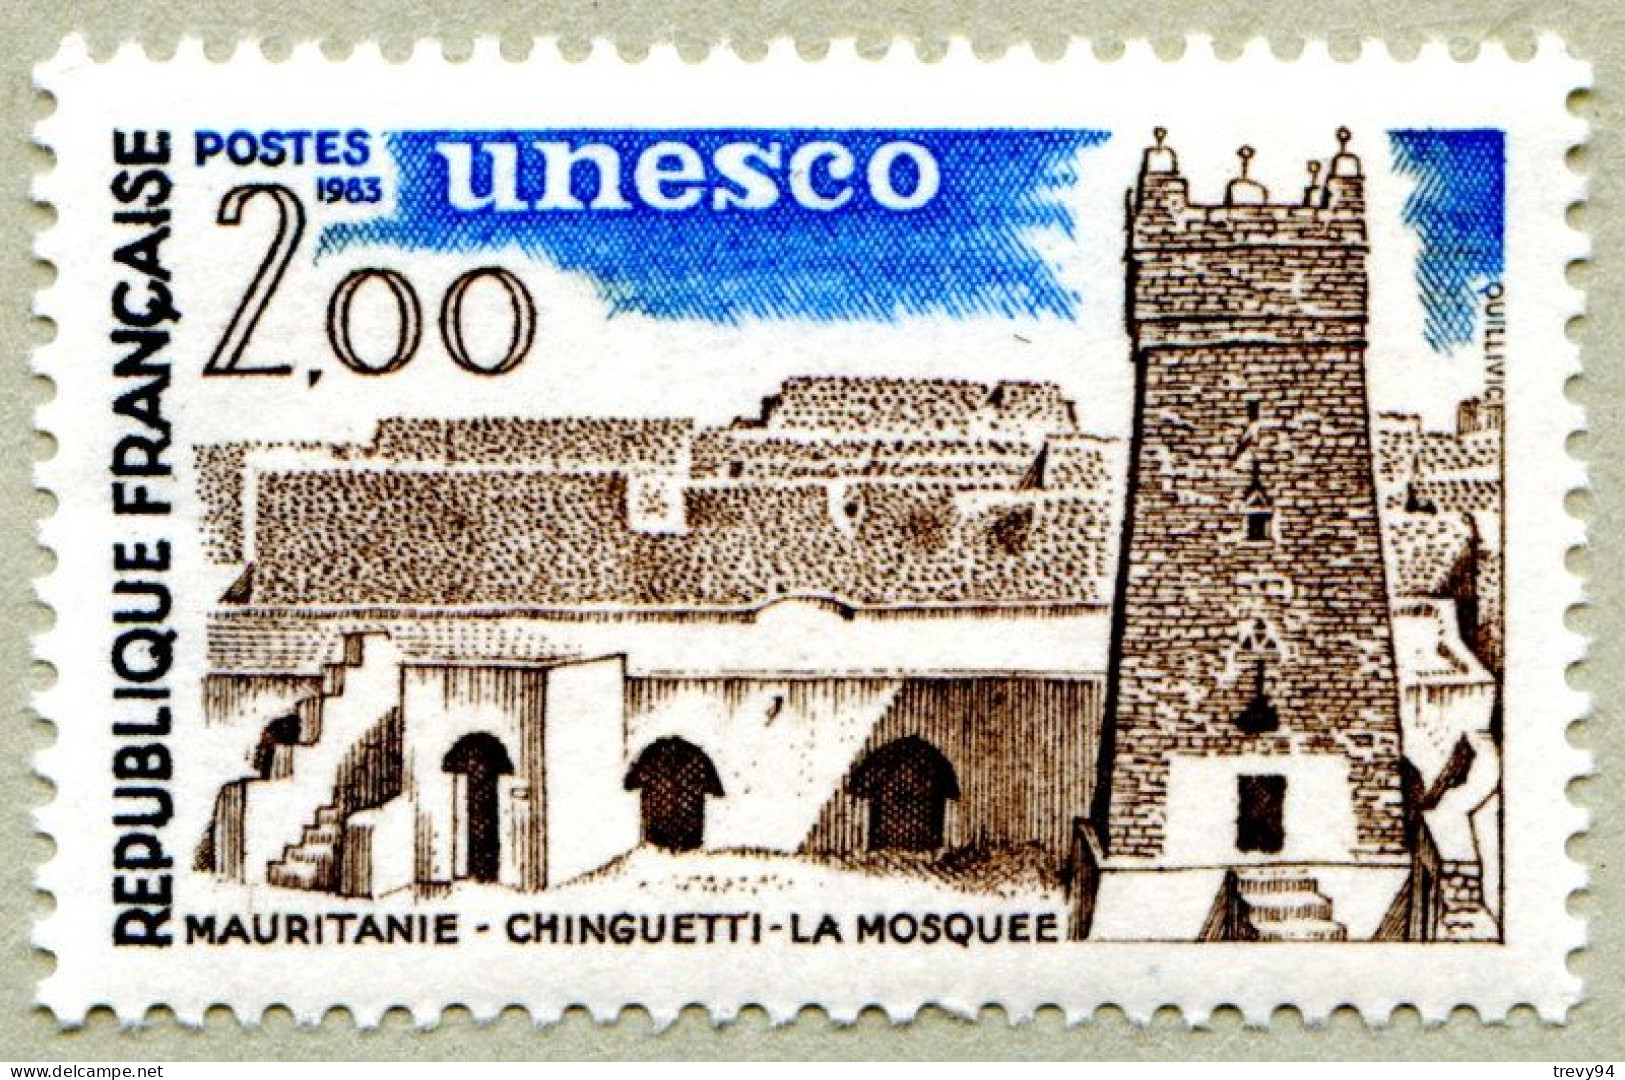 Timbre De Service 1983 - UNESCO Mauritanie Chinguetti - La Mosquée - N° 75 Neuf - Mint/Hinged